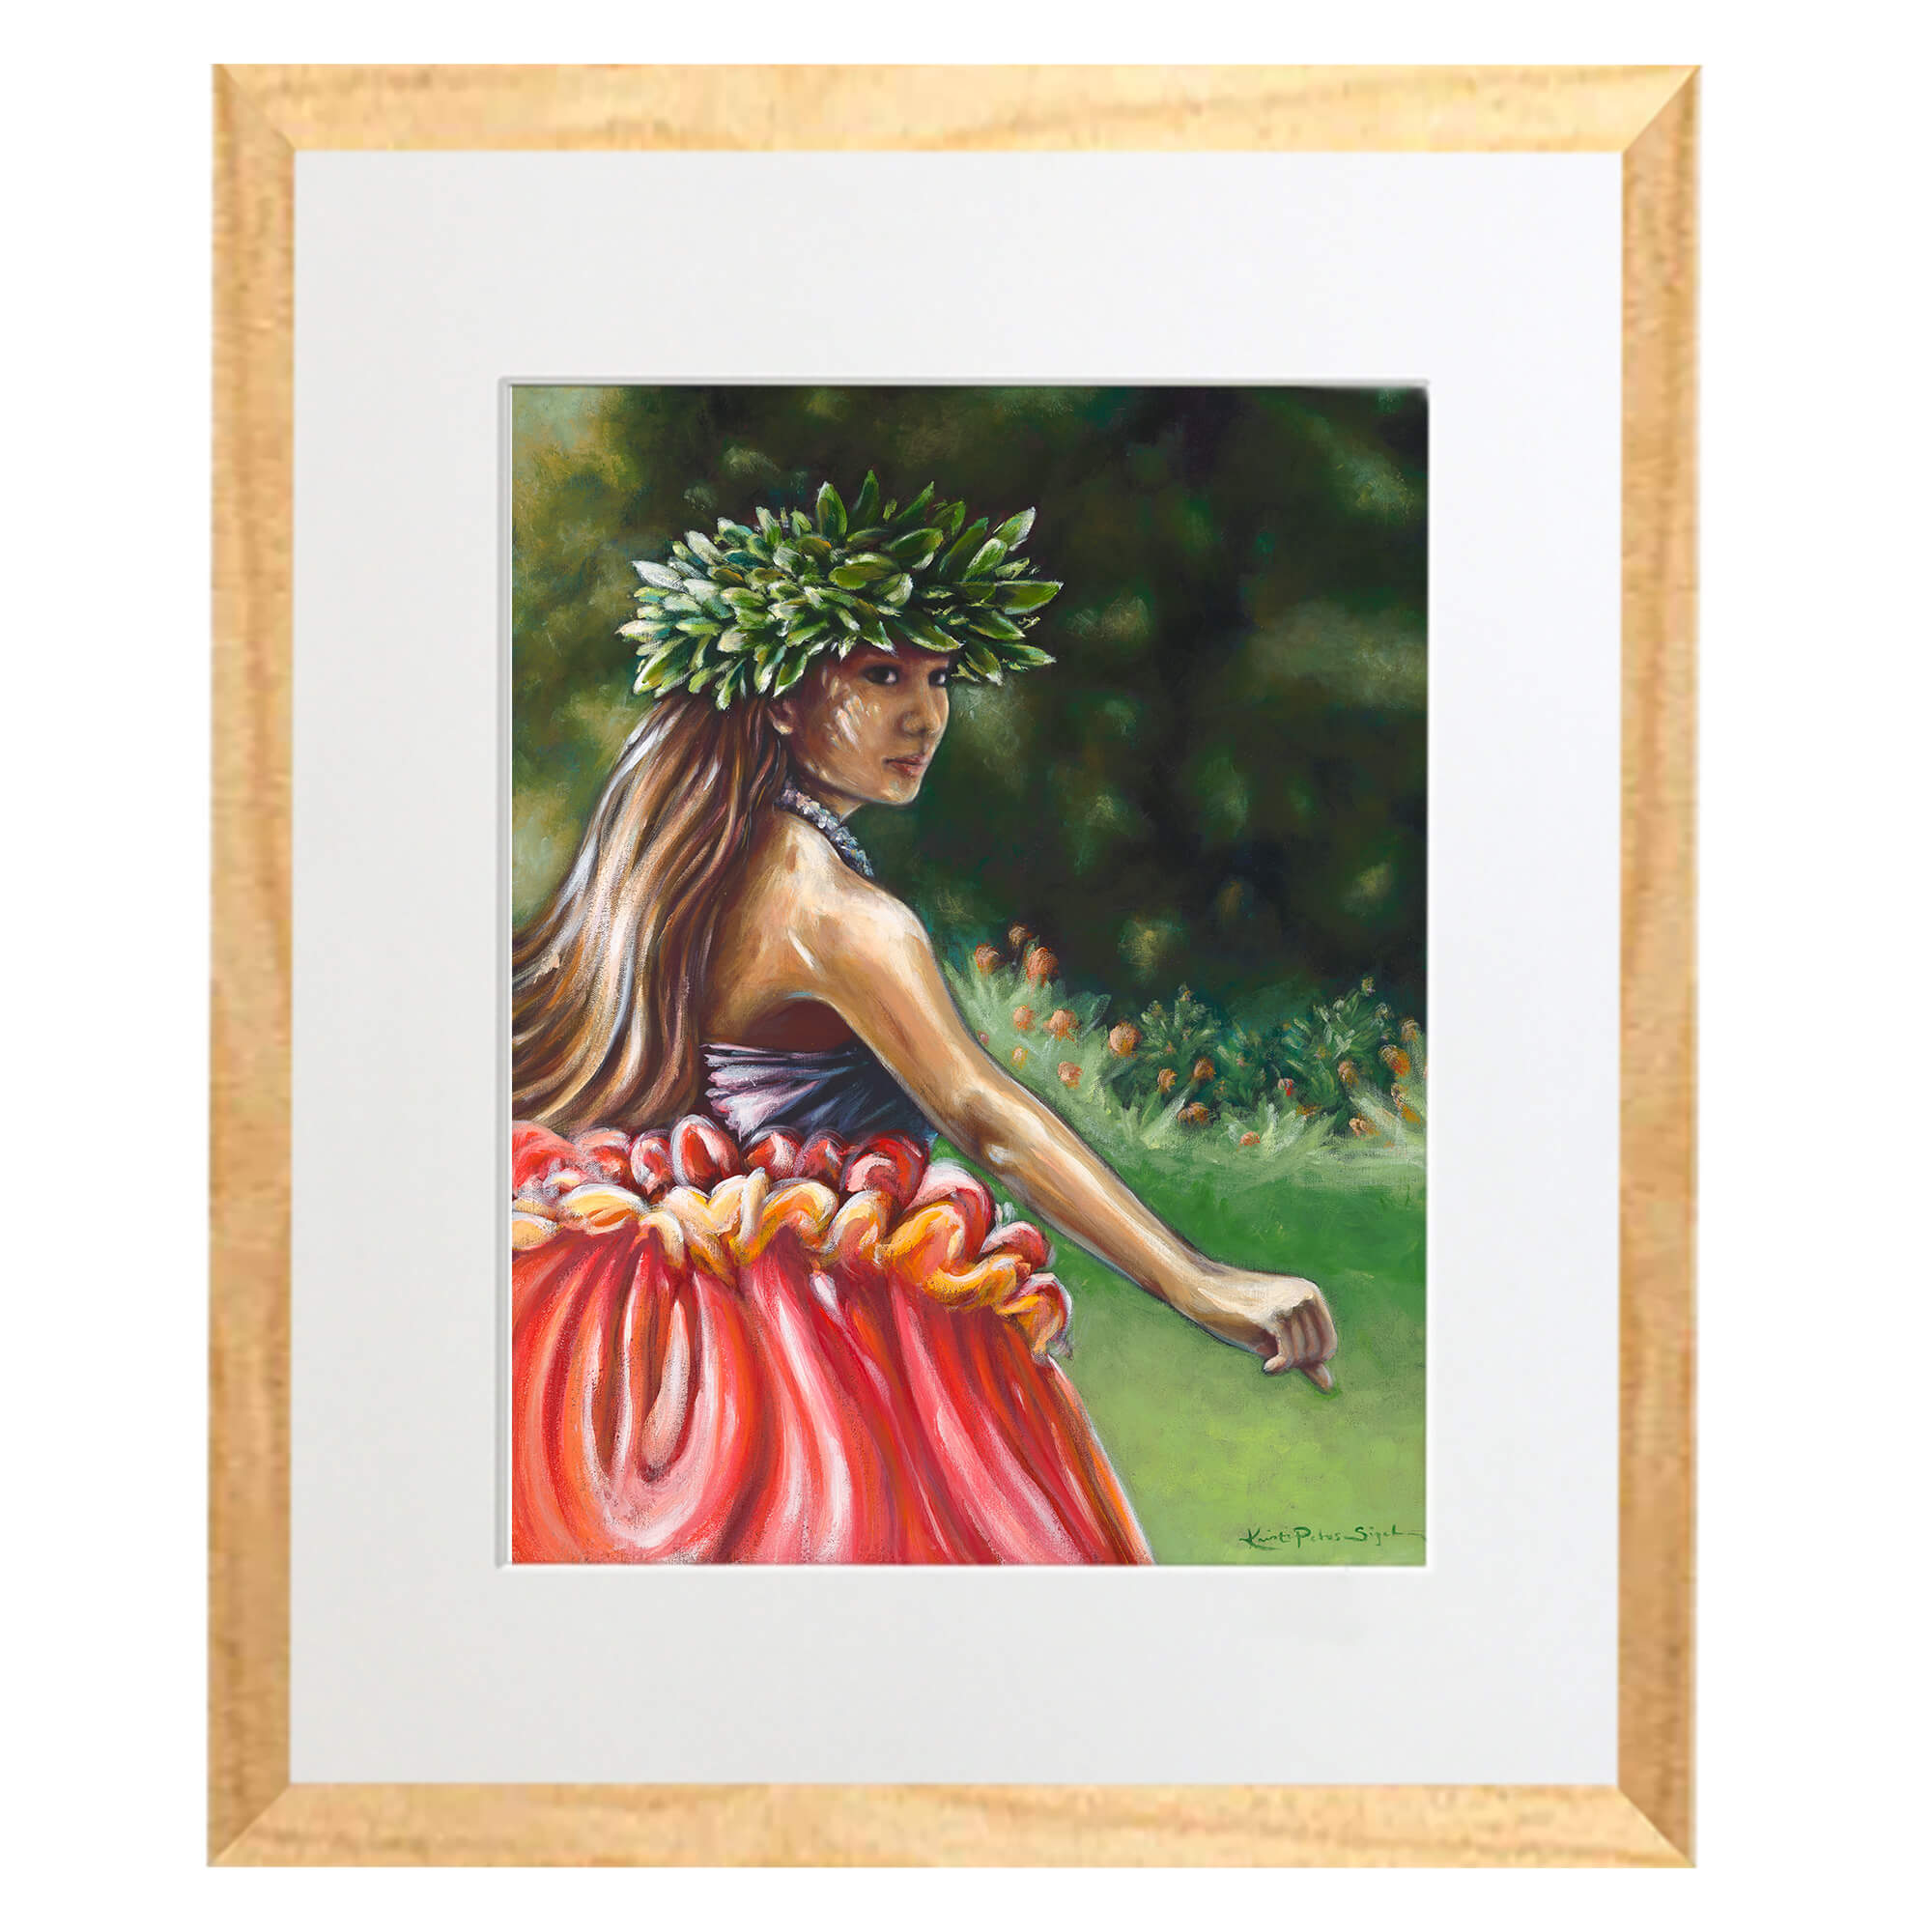 Matted art print with wood frame showcasing a garden  by hawaii artist Kristi Petosa